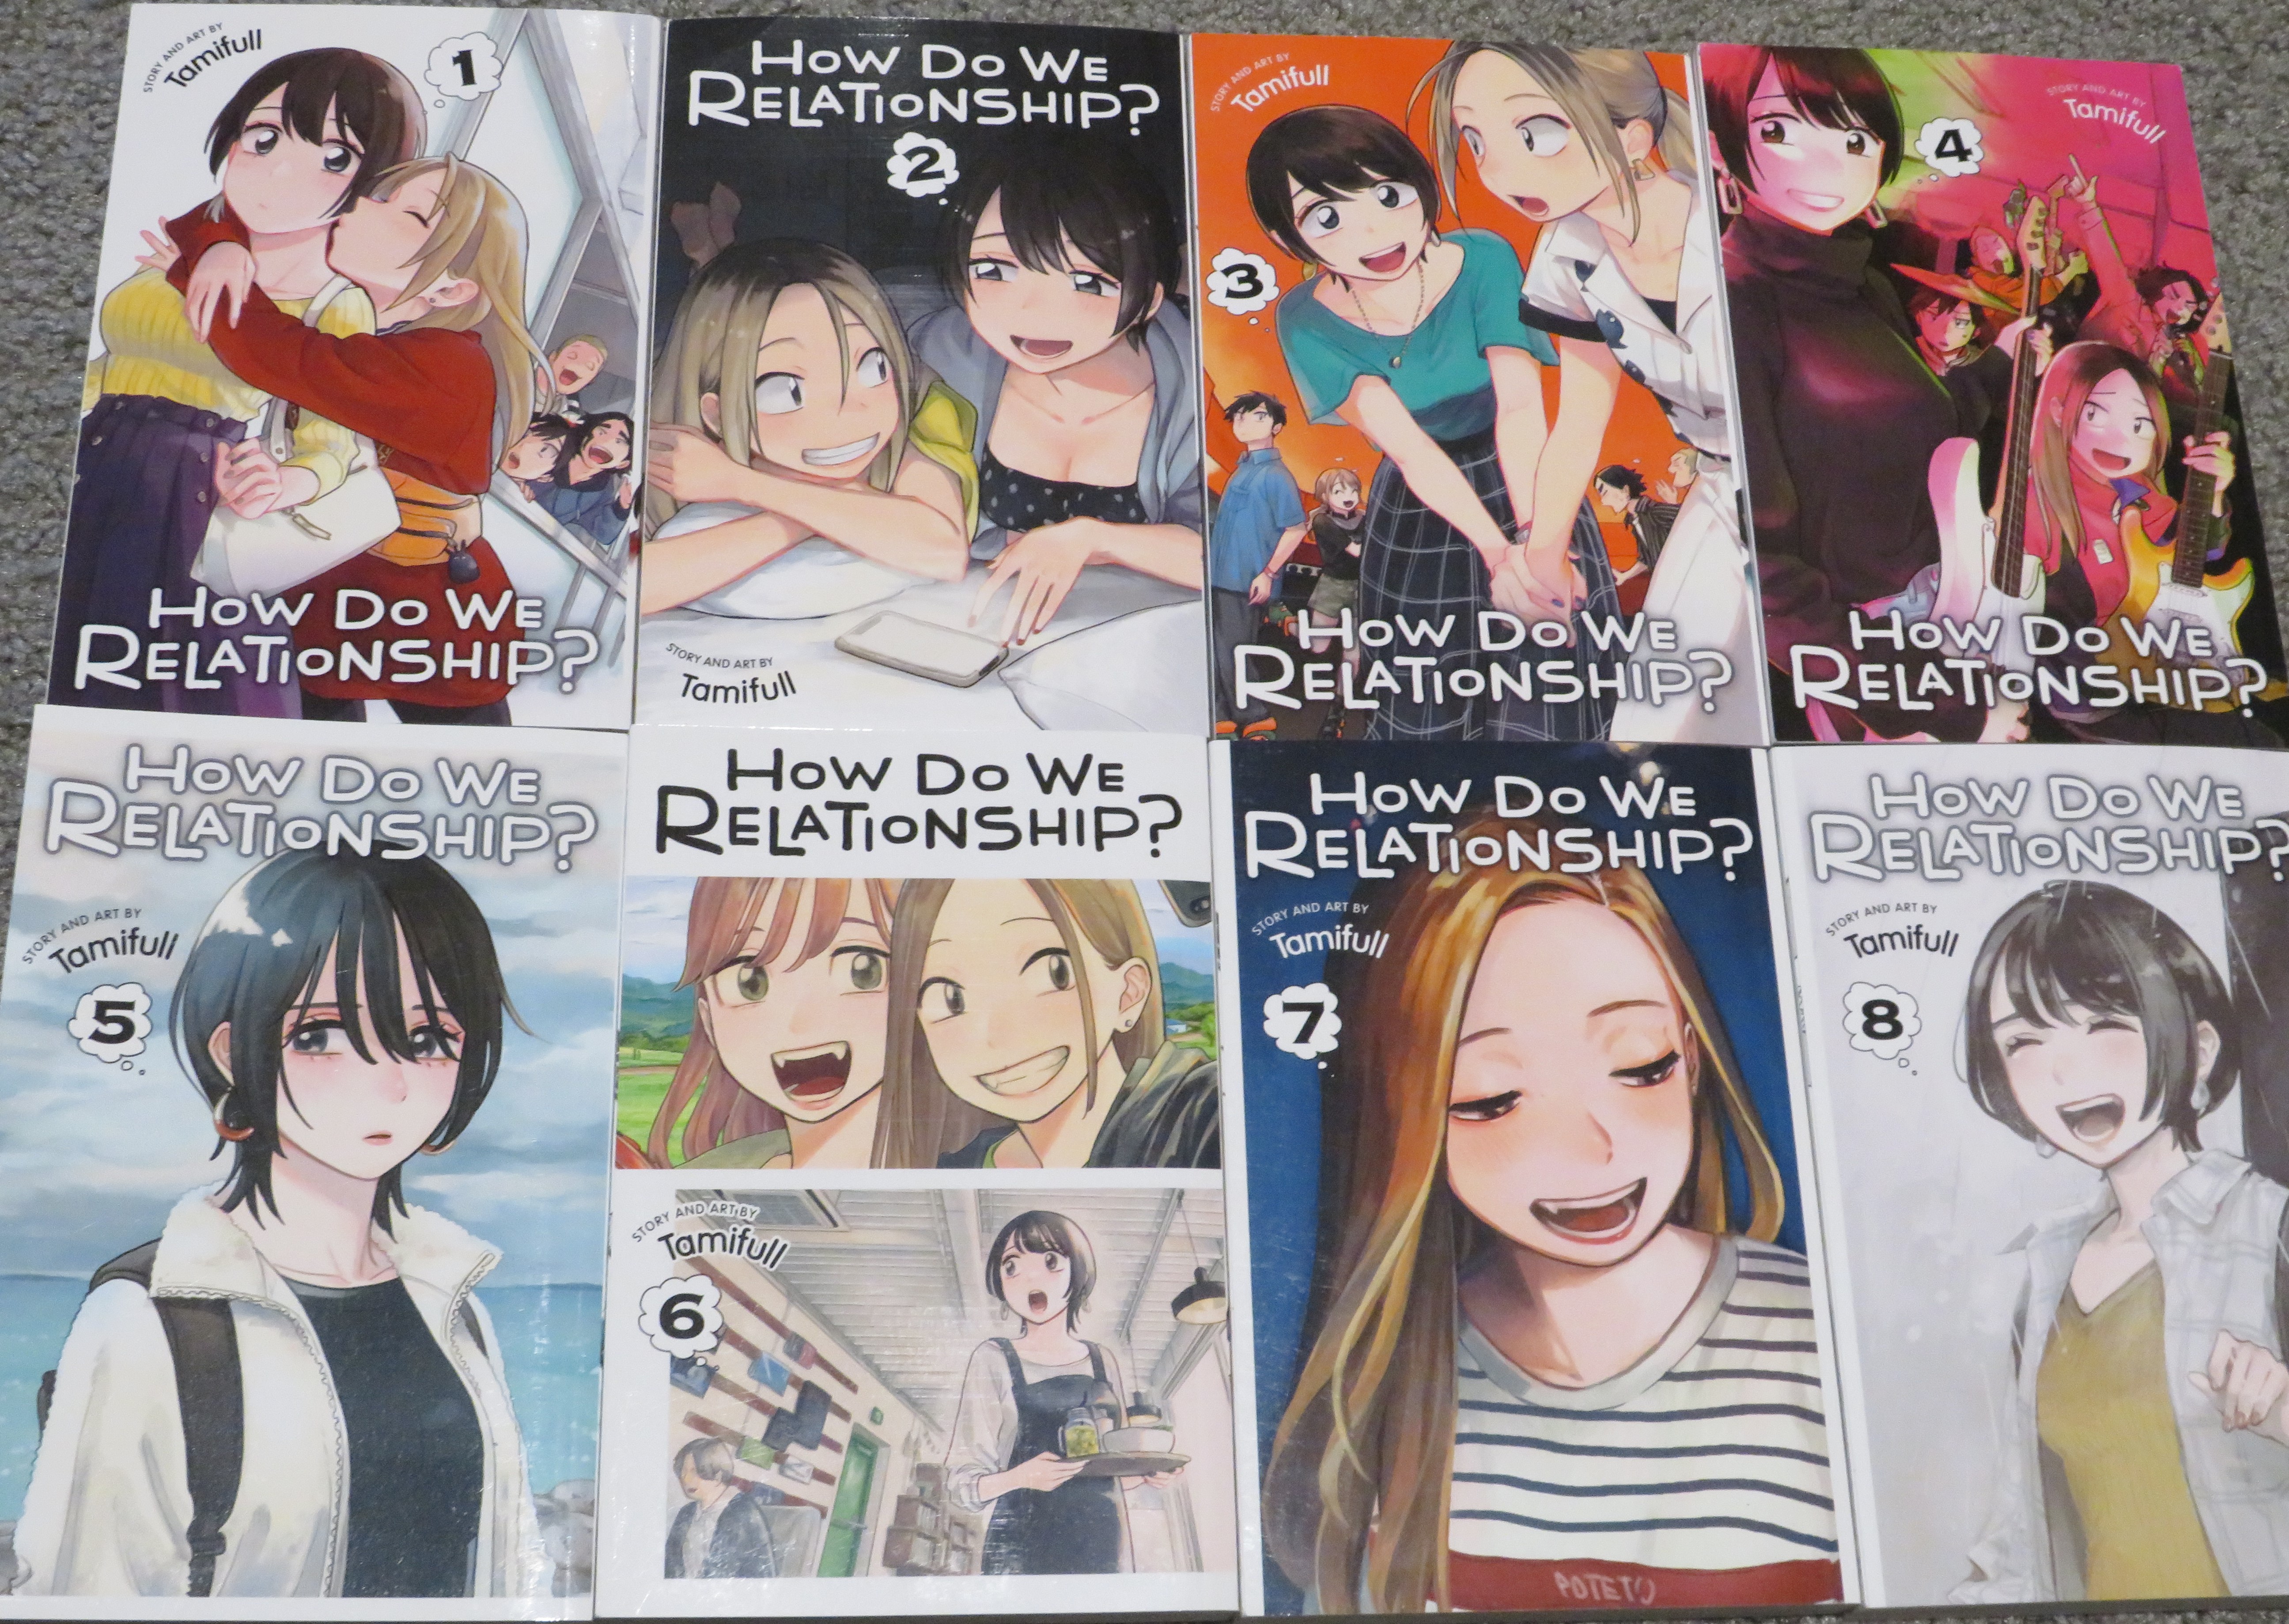 Yuri Manga “Bloom Into You” Now Has One Million Copies in Print! 